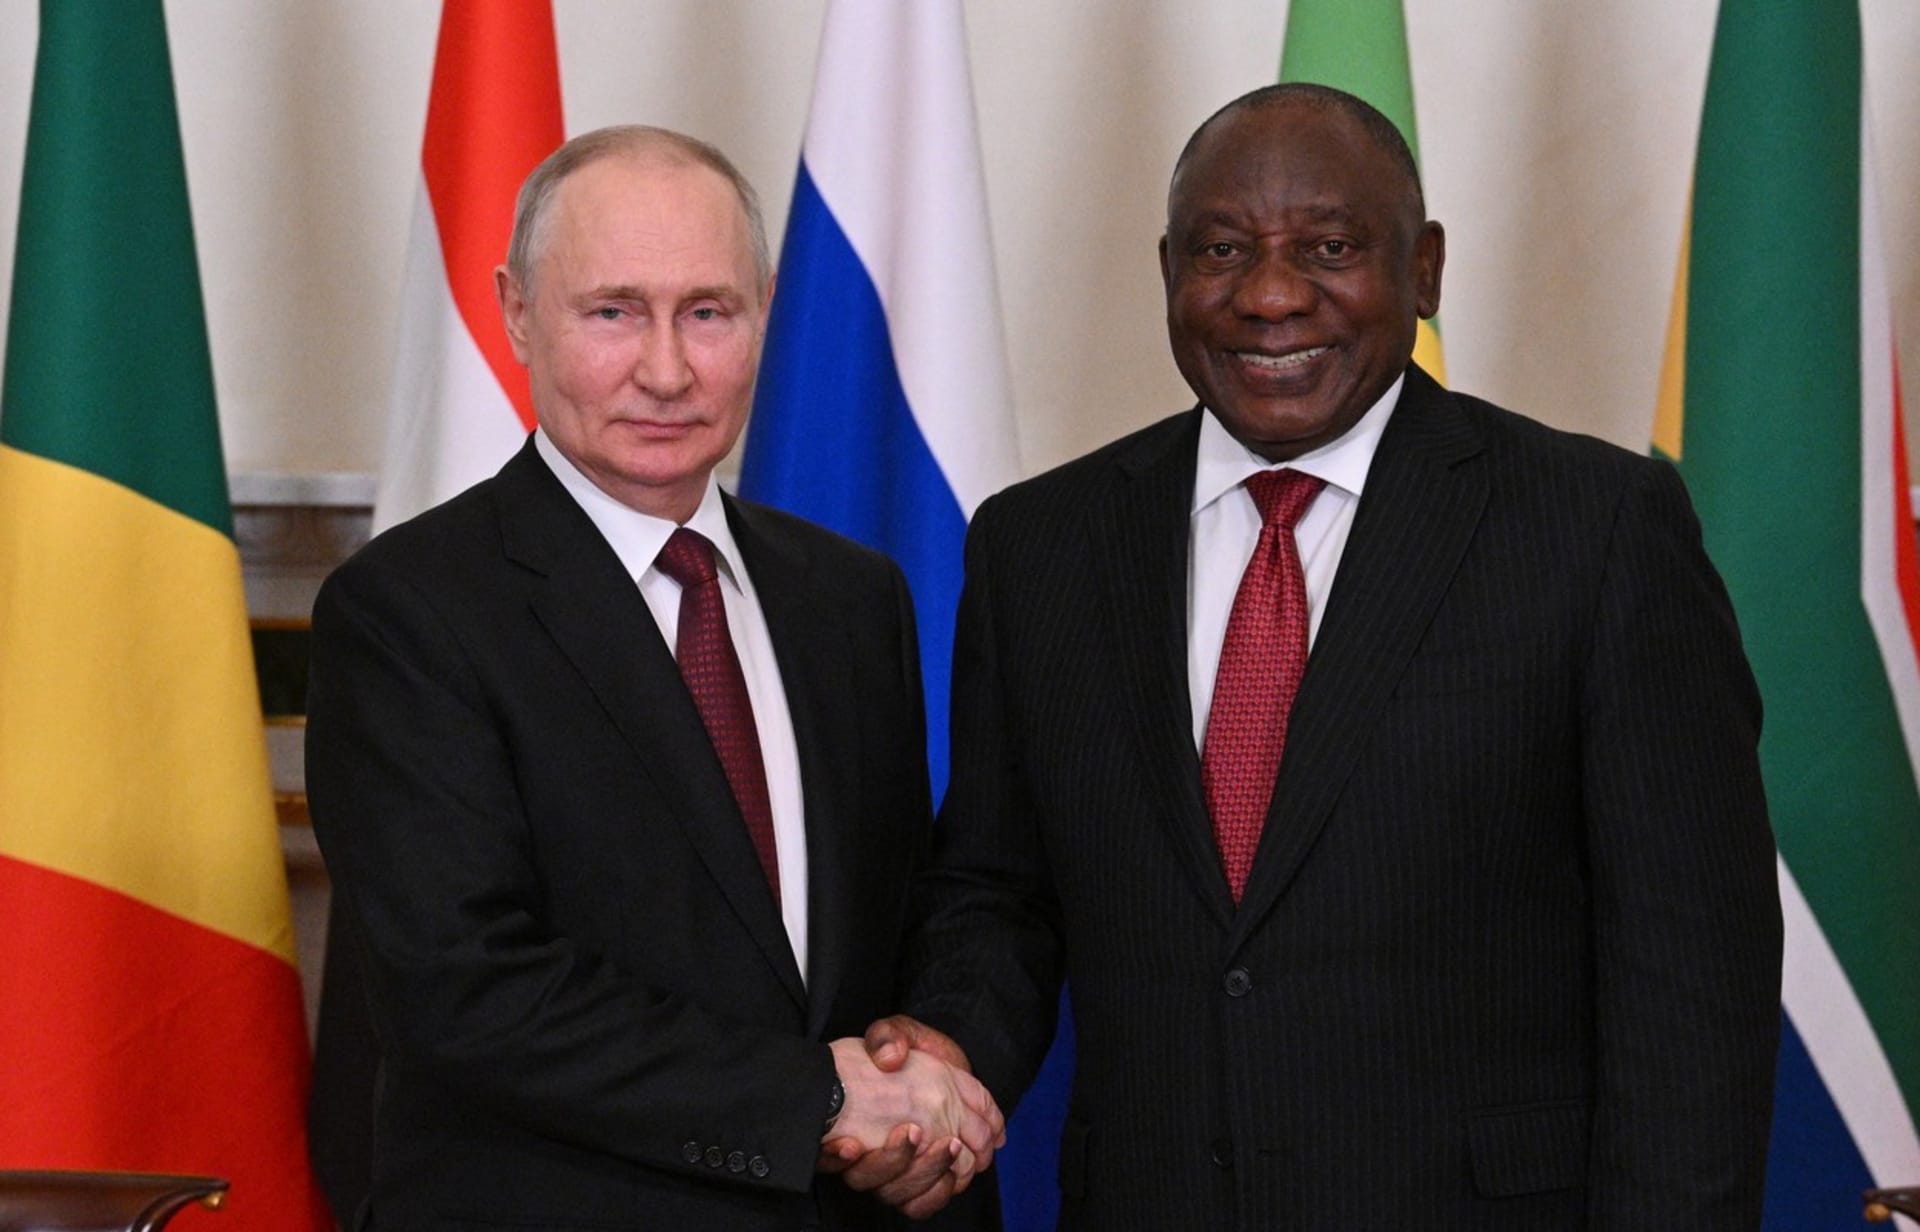 Ruský prezident Vladimir Putin a jihoafrický prezident Cyril Ramaphosa